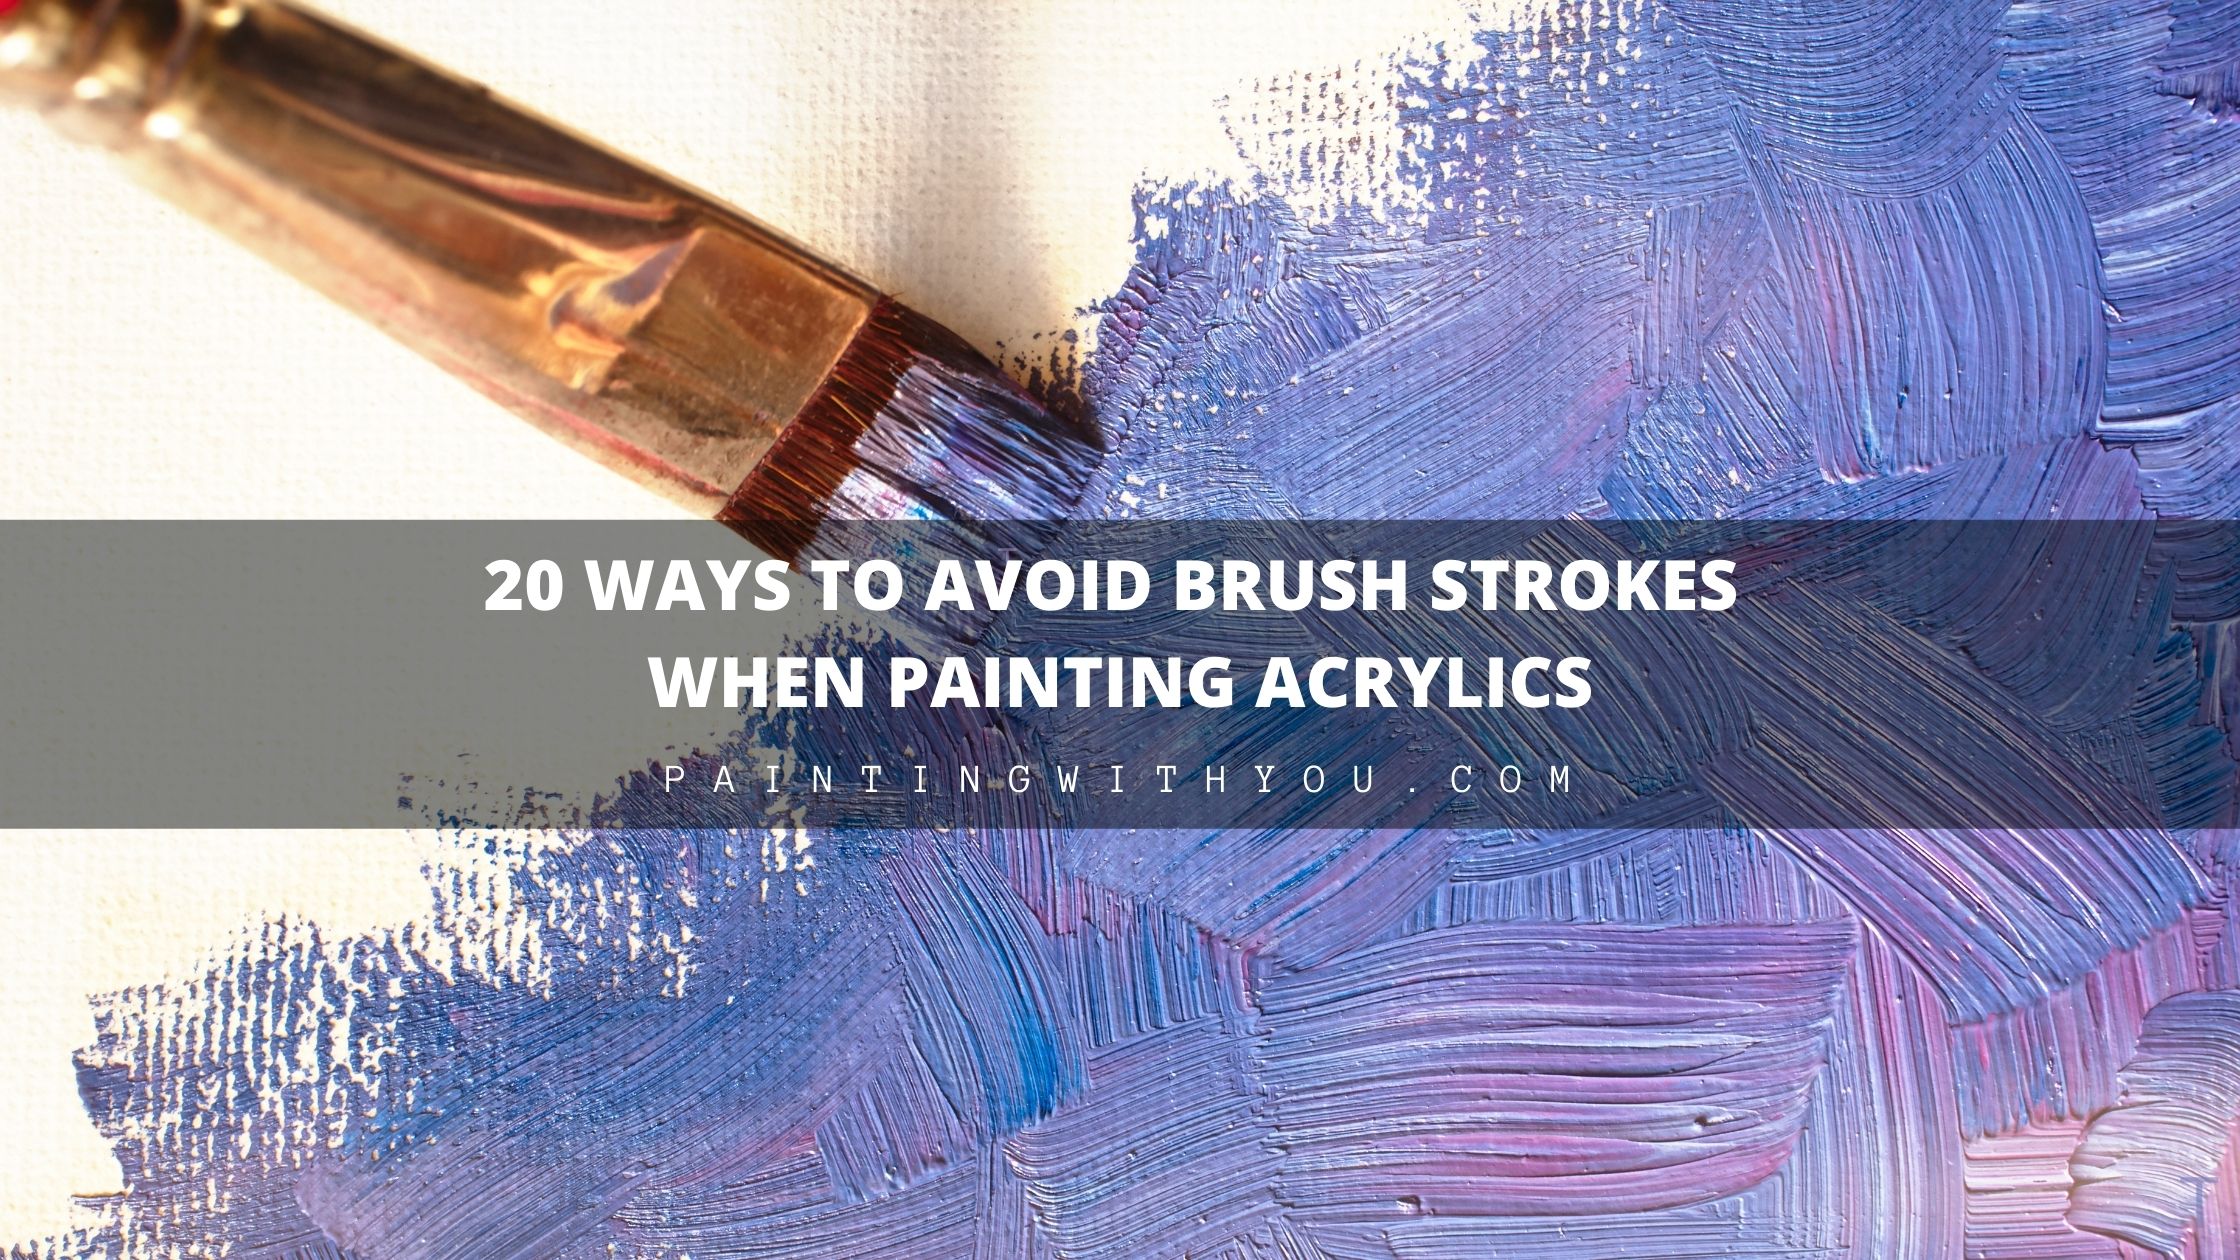 20 Ways to Avoid Brush Strokes Painting Acrylics